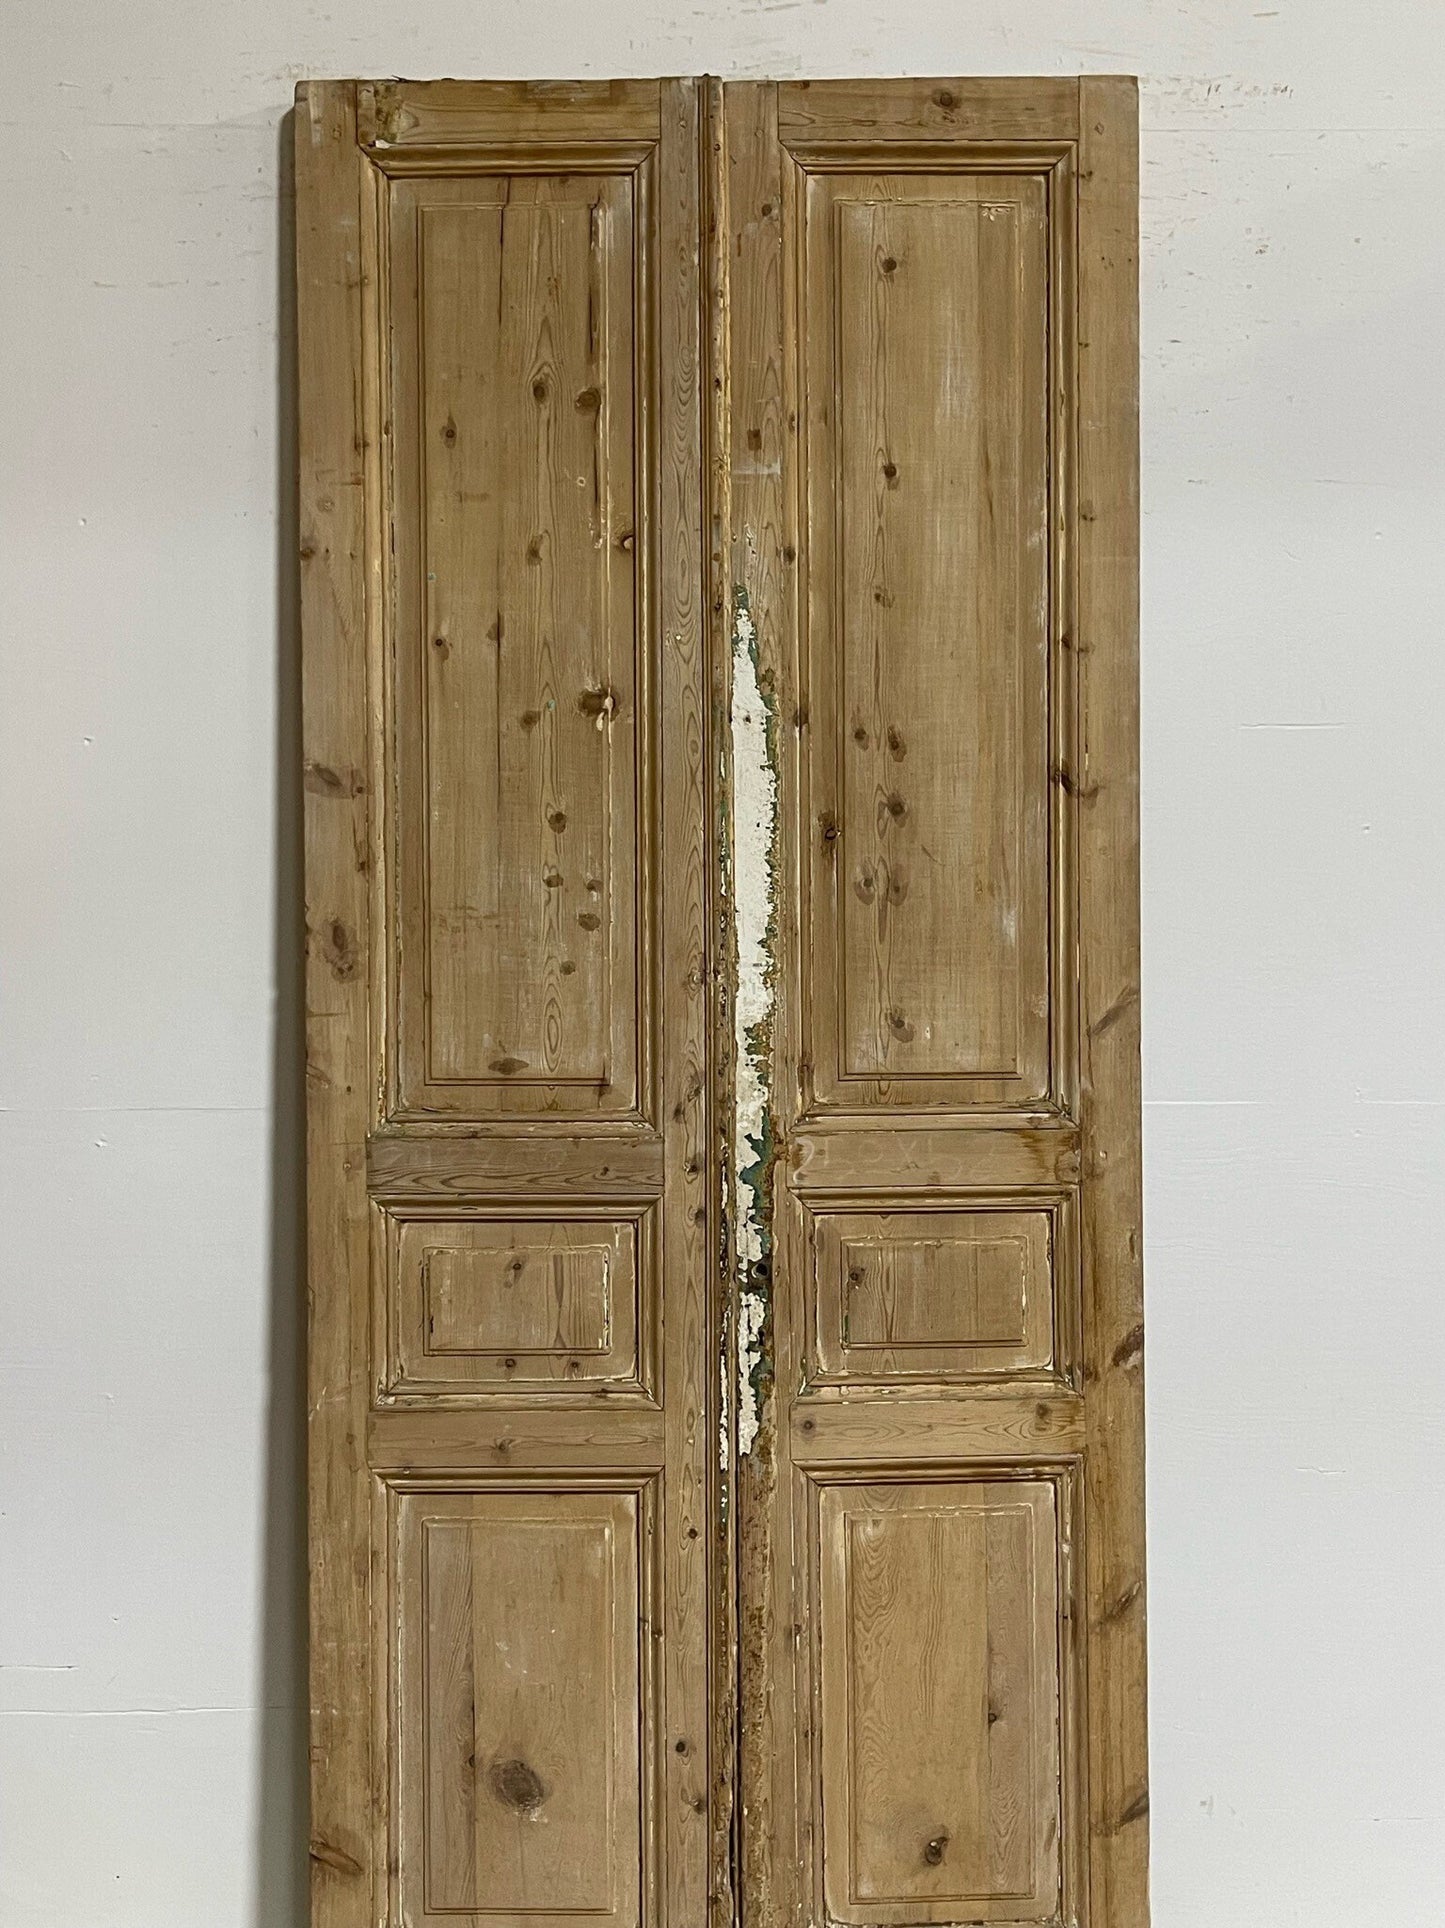 Antique French doors (97.5X40.75) G0109